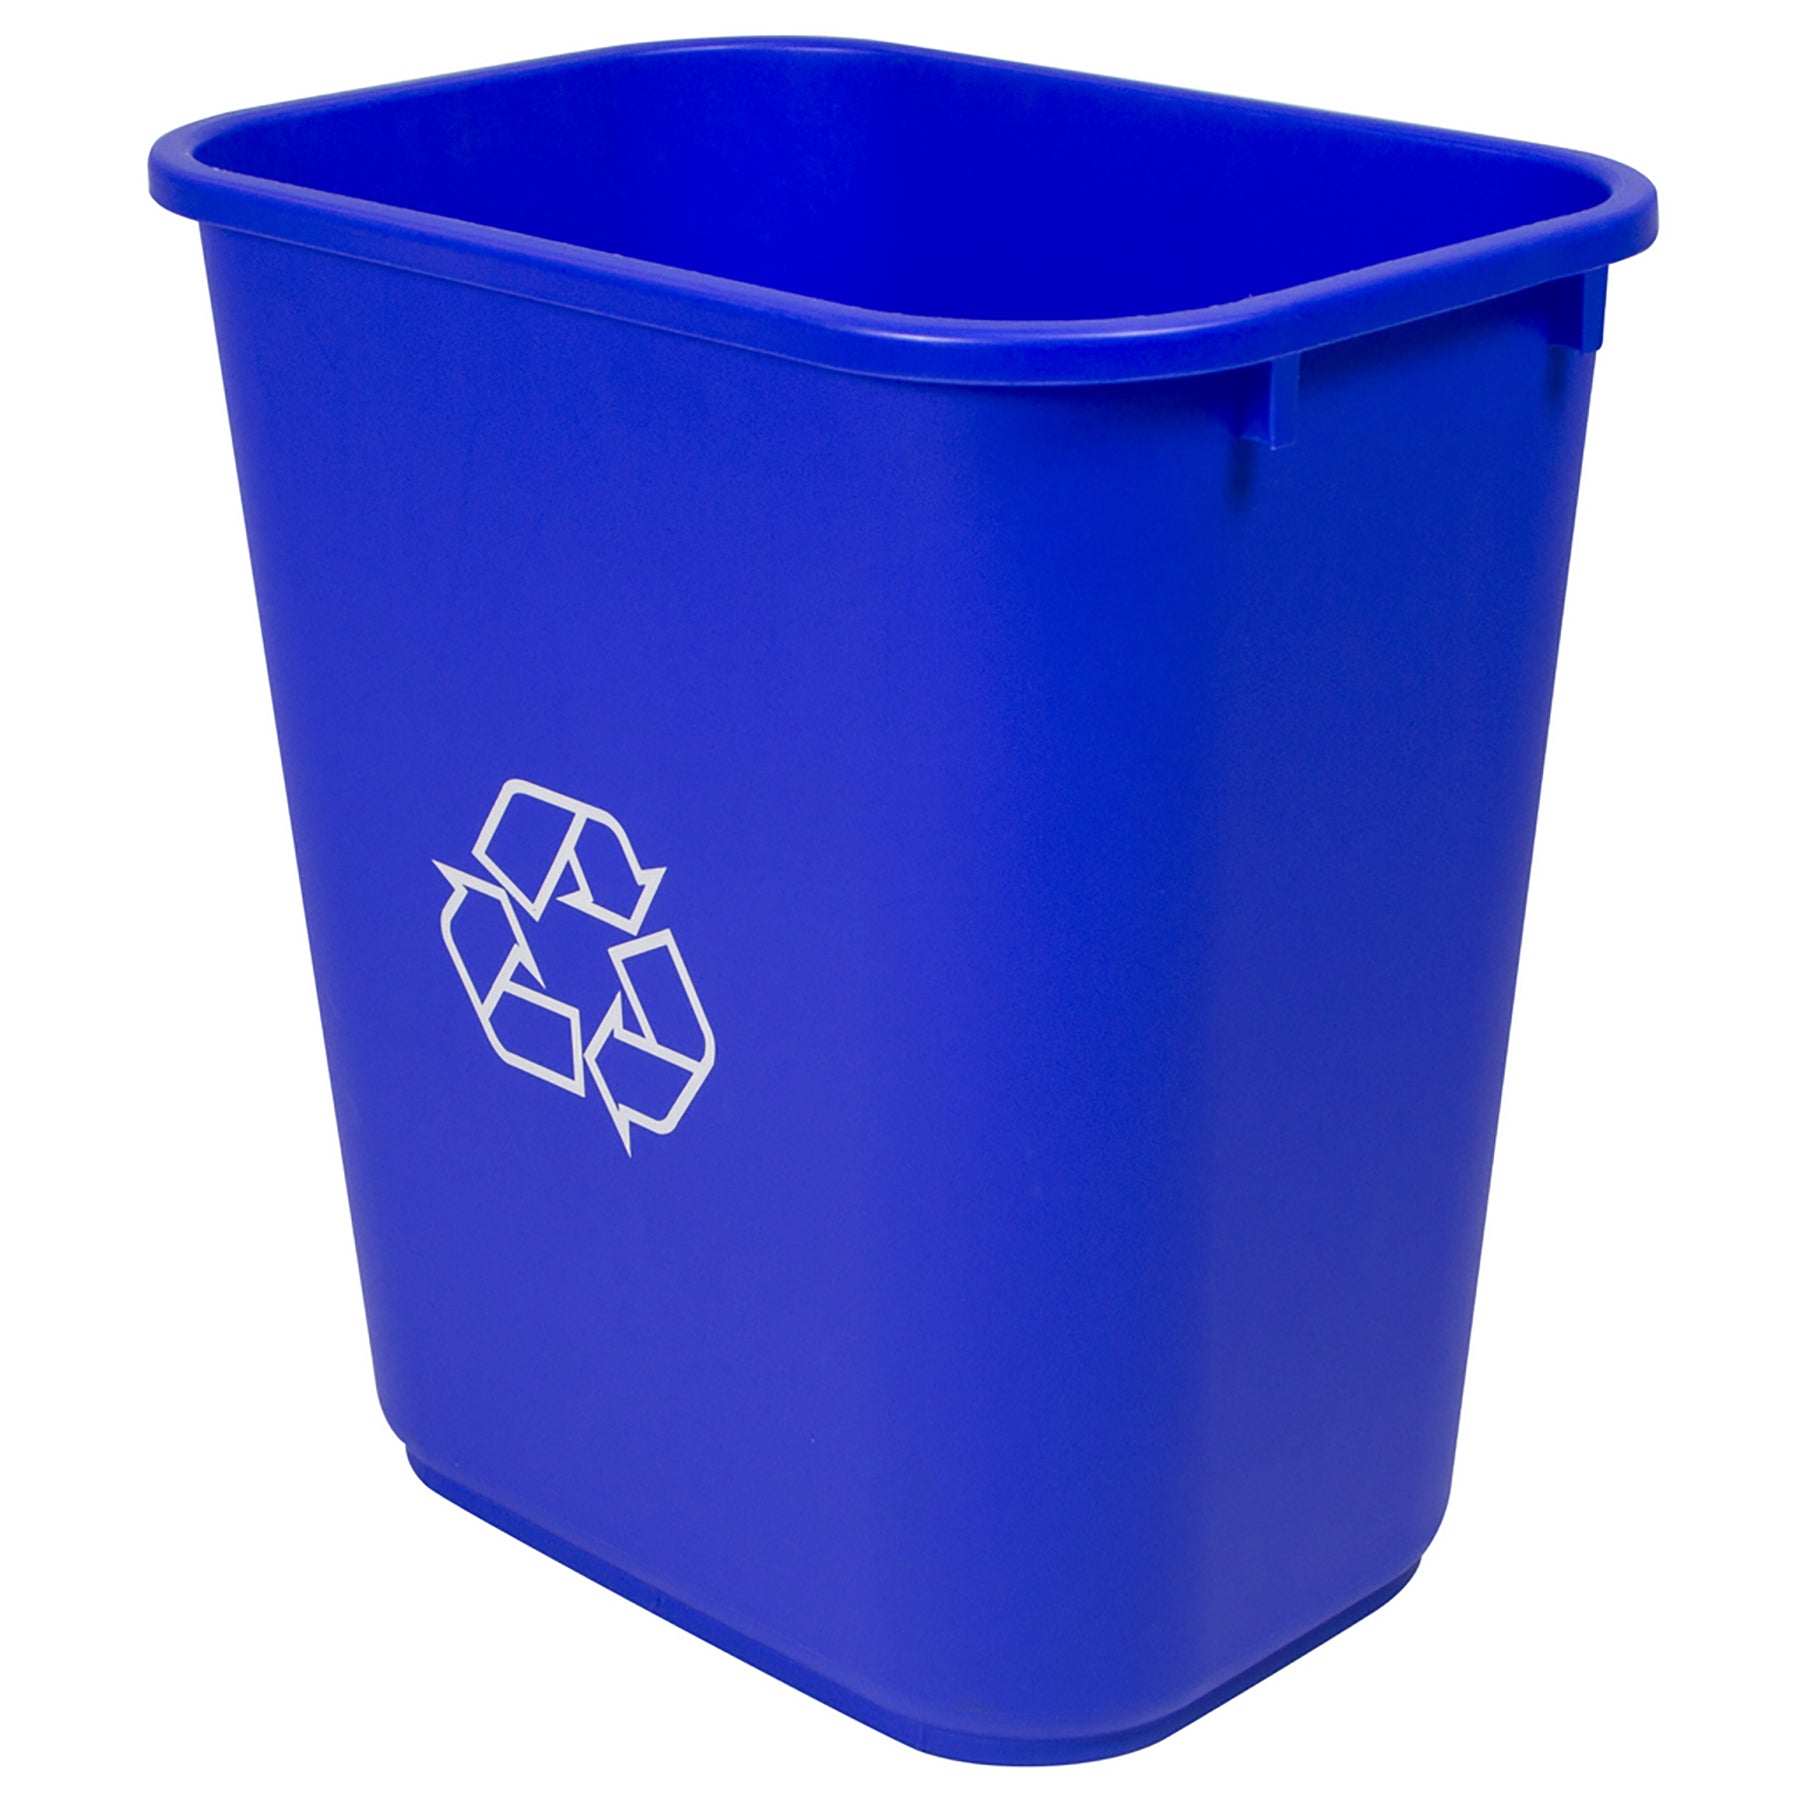 Storex Recycling Waste Bin Plastic 28L